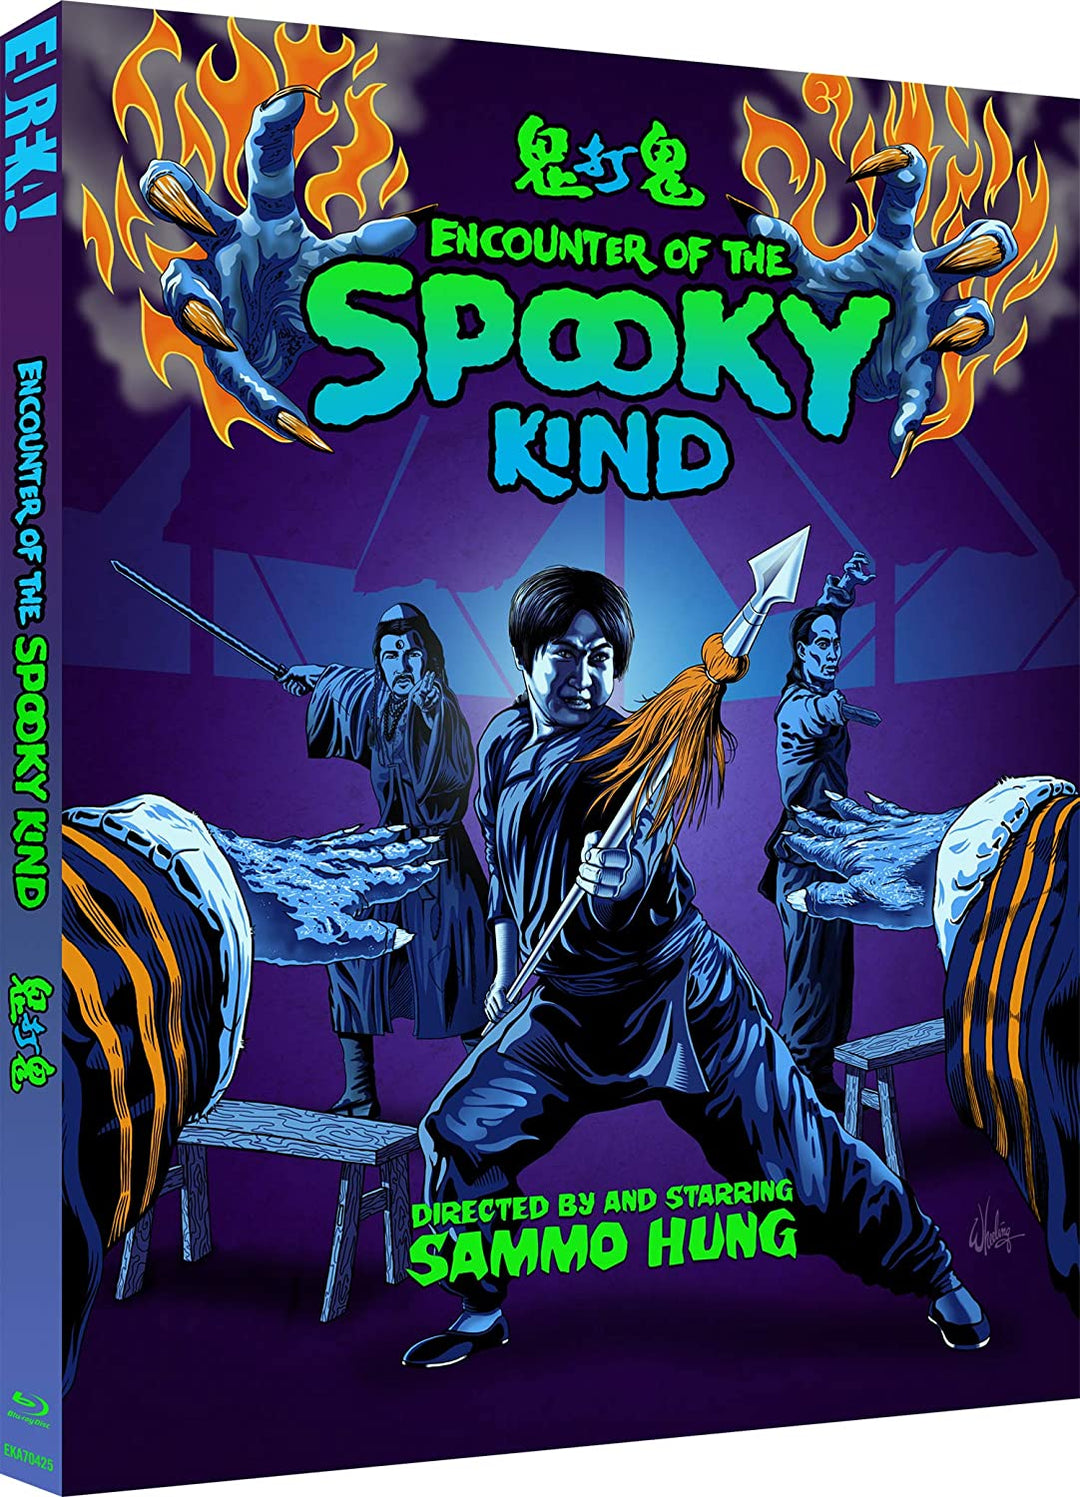 Encounter Of The Spooky Kind [GUI DA GUI] (Eureka Classics) – Action [Blu-ray]